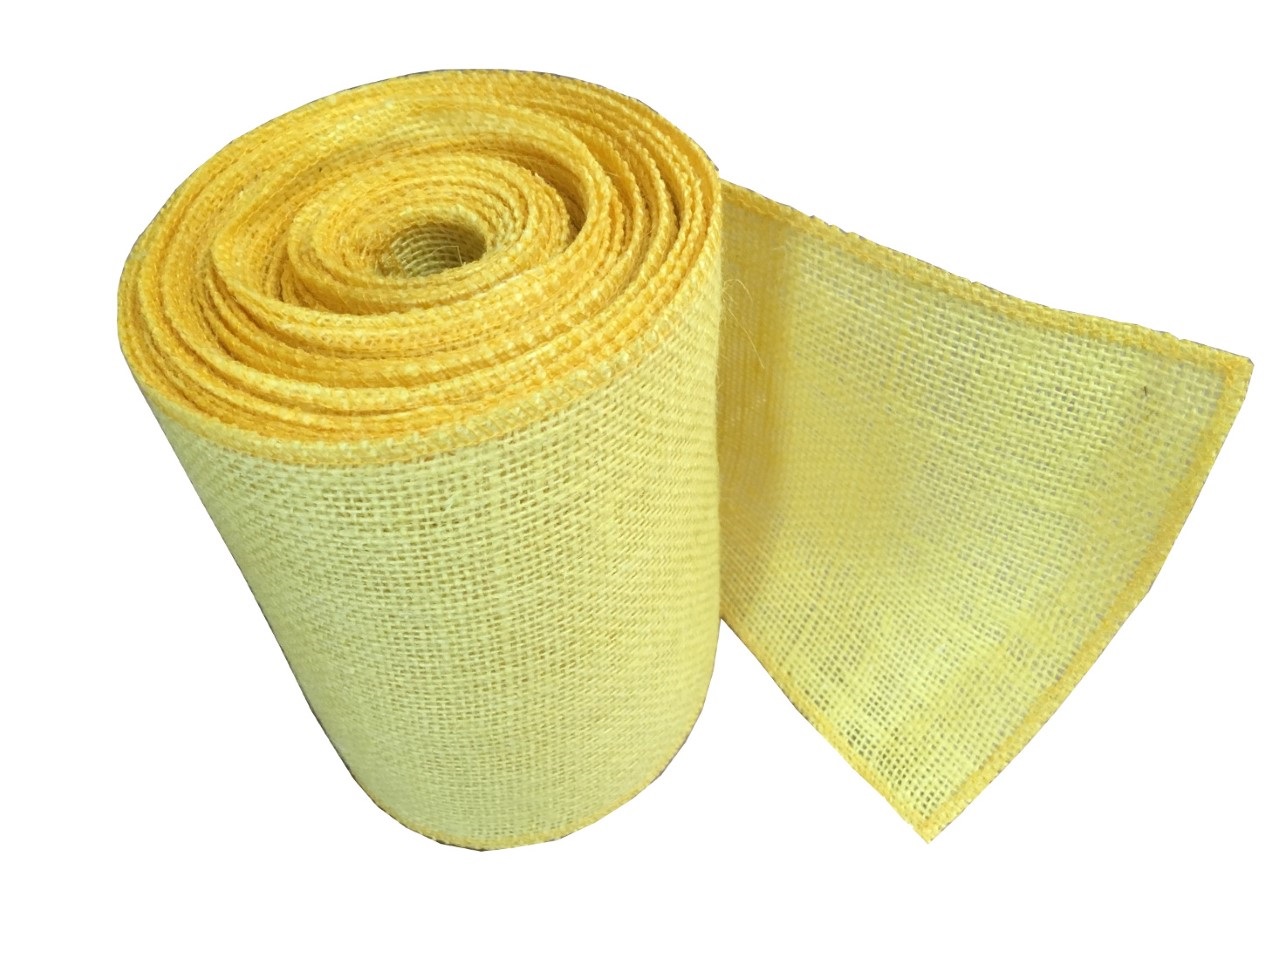 6" Yellow Burlap Ribbon - 10 Yards (serged) Made in USA